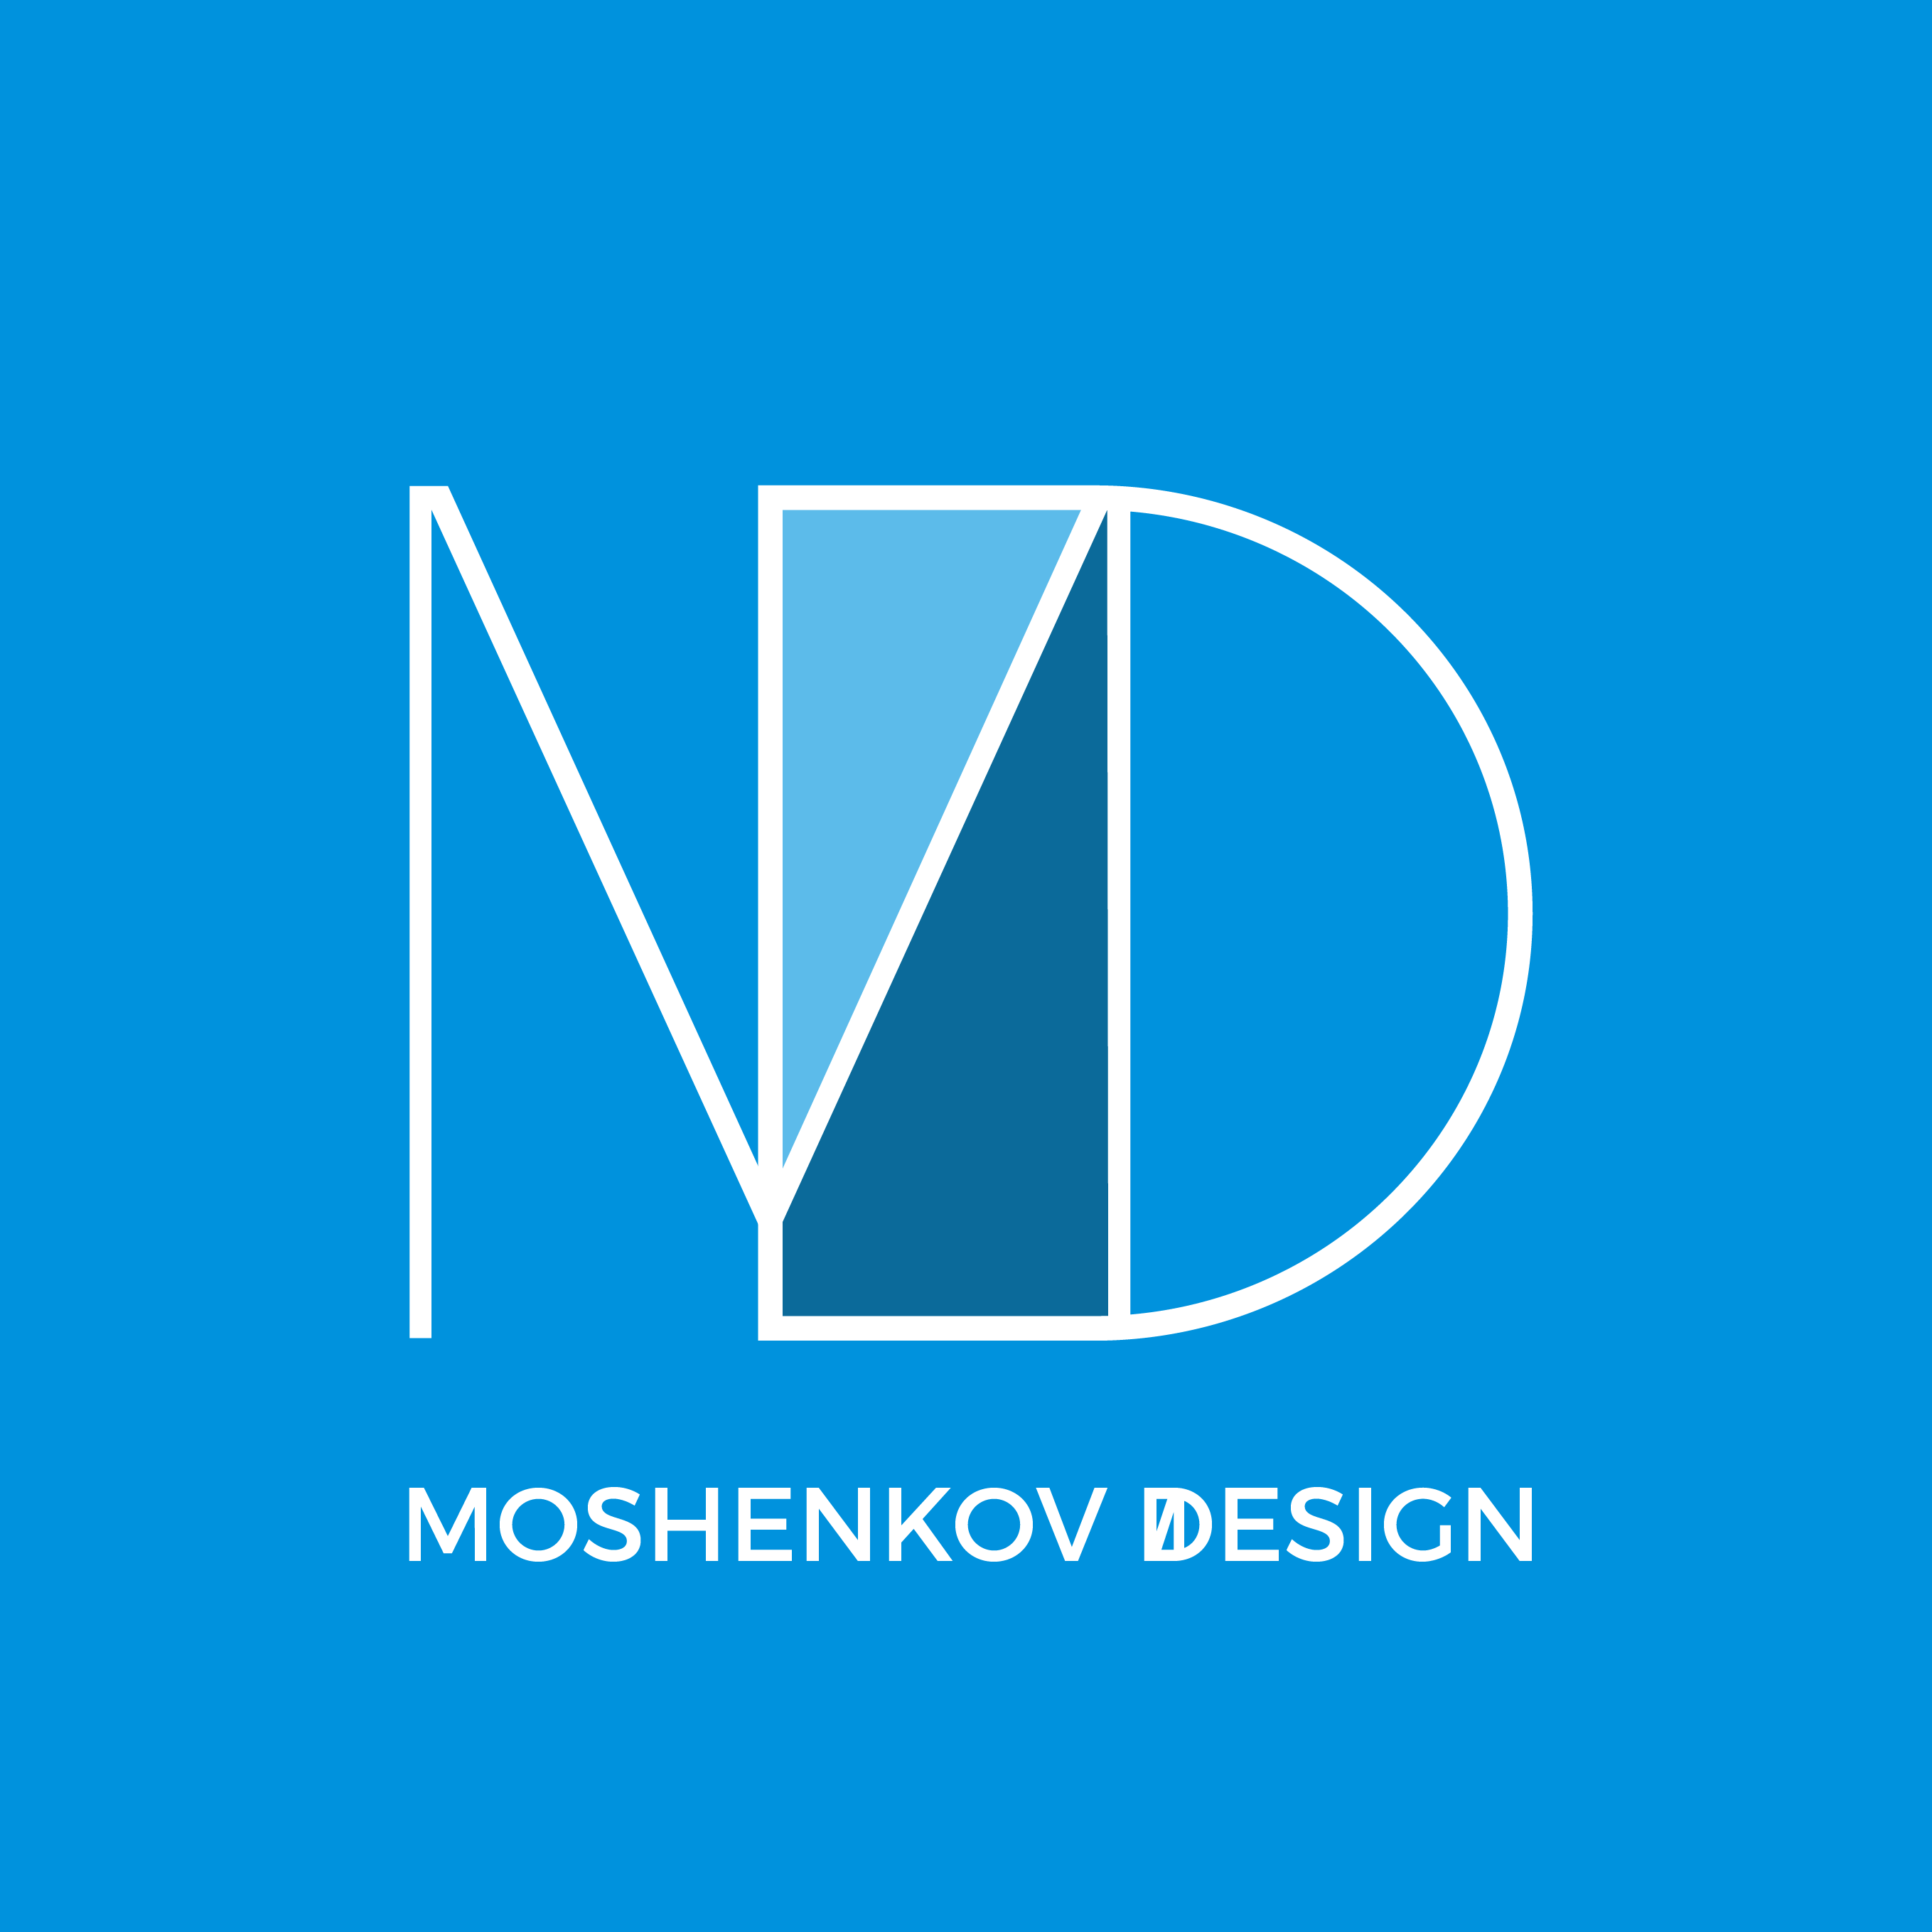 Moshenkov Design profile on Qualified.One